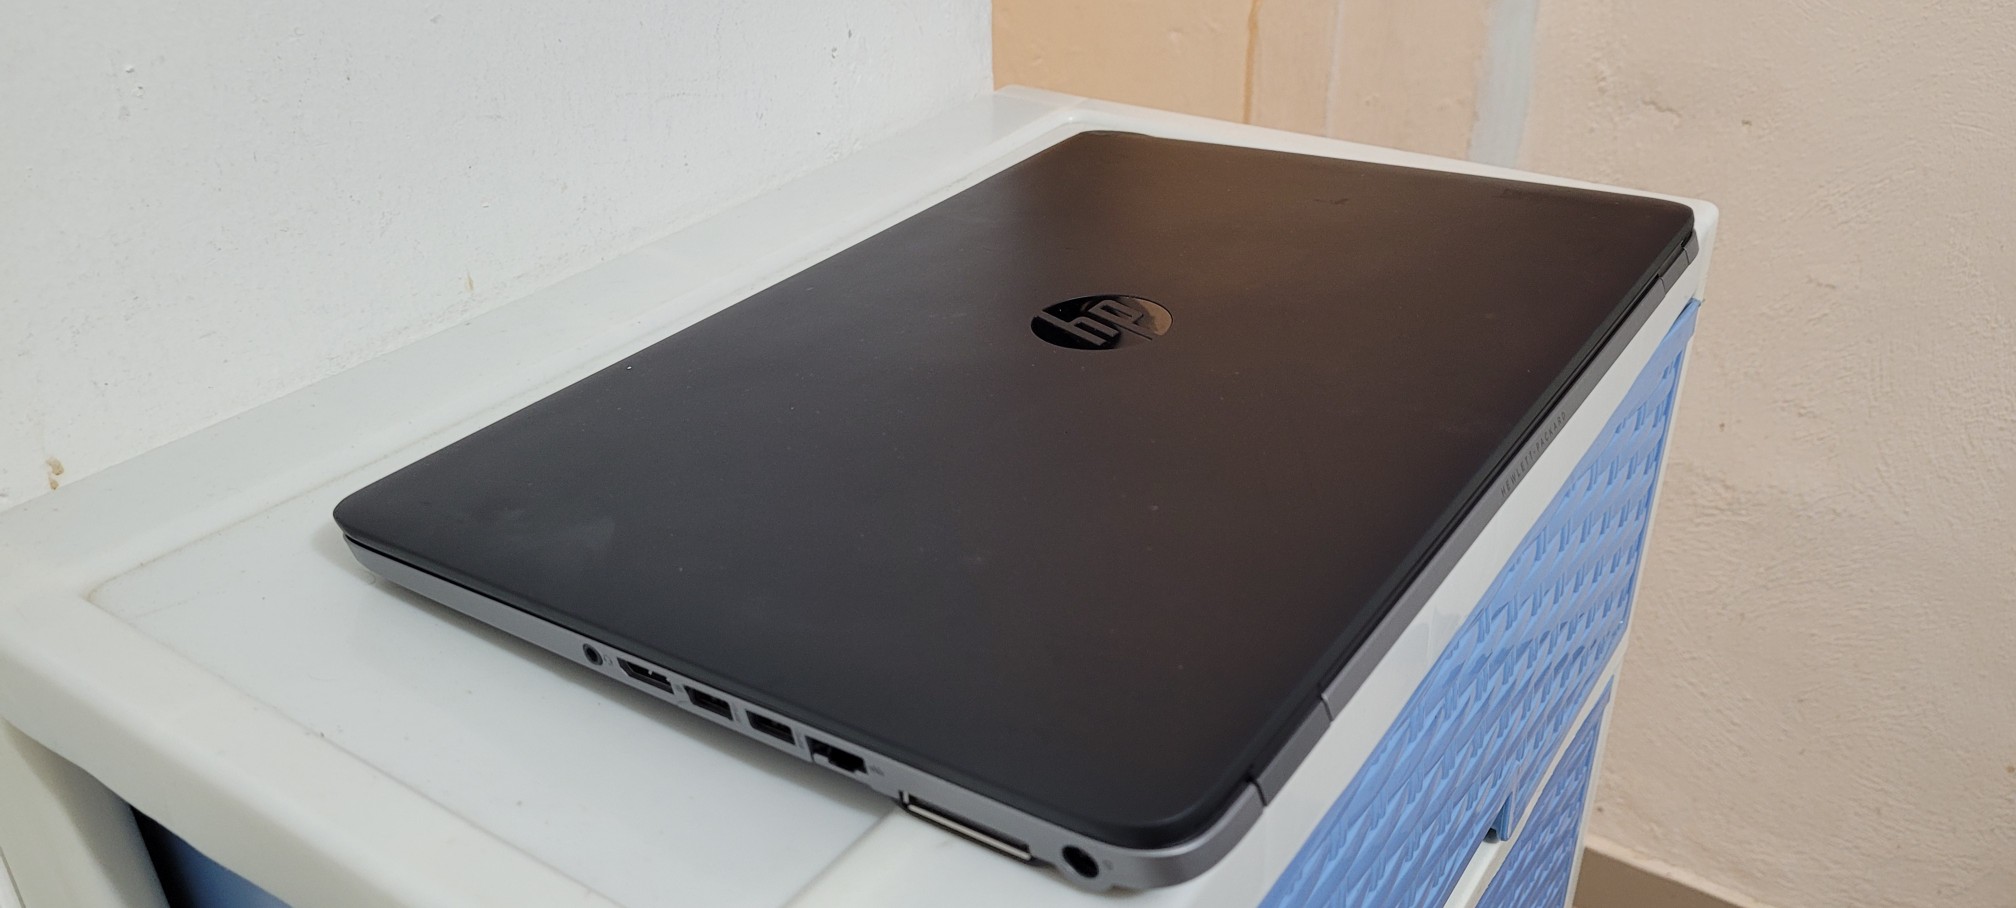 computadoras y laptops - Hp Elitebook 17 Core i7 Ram 16gb SSD 500GB Video 8gb 2